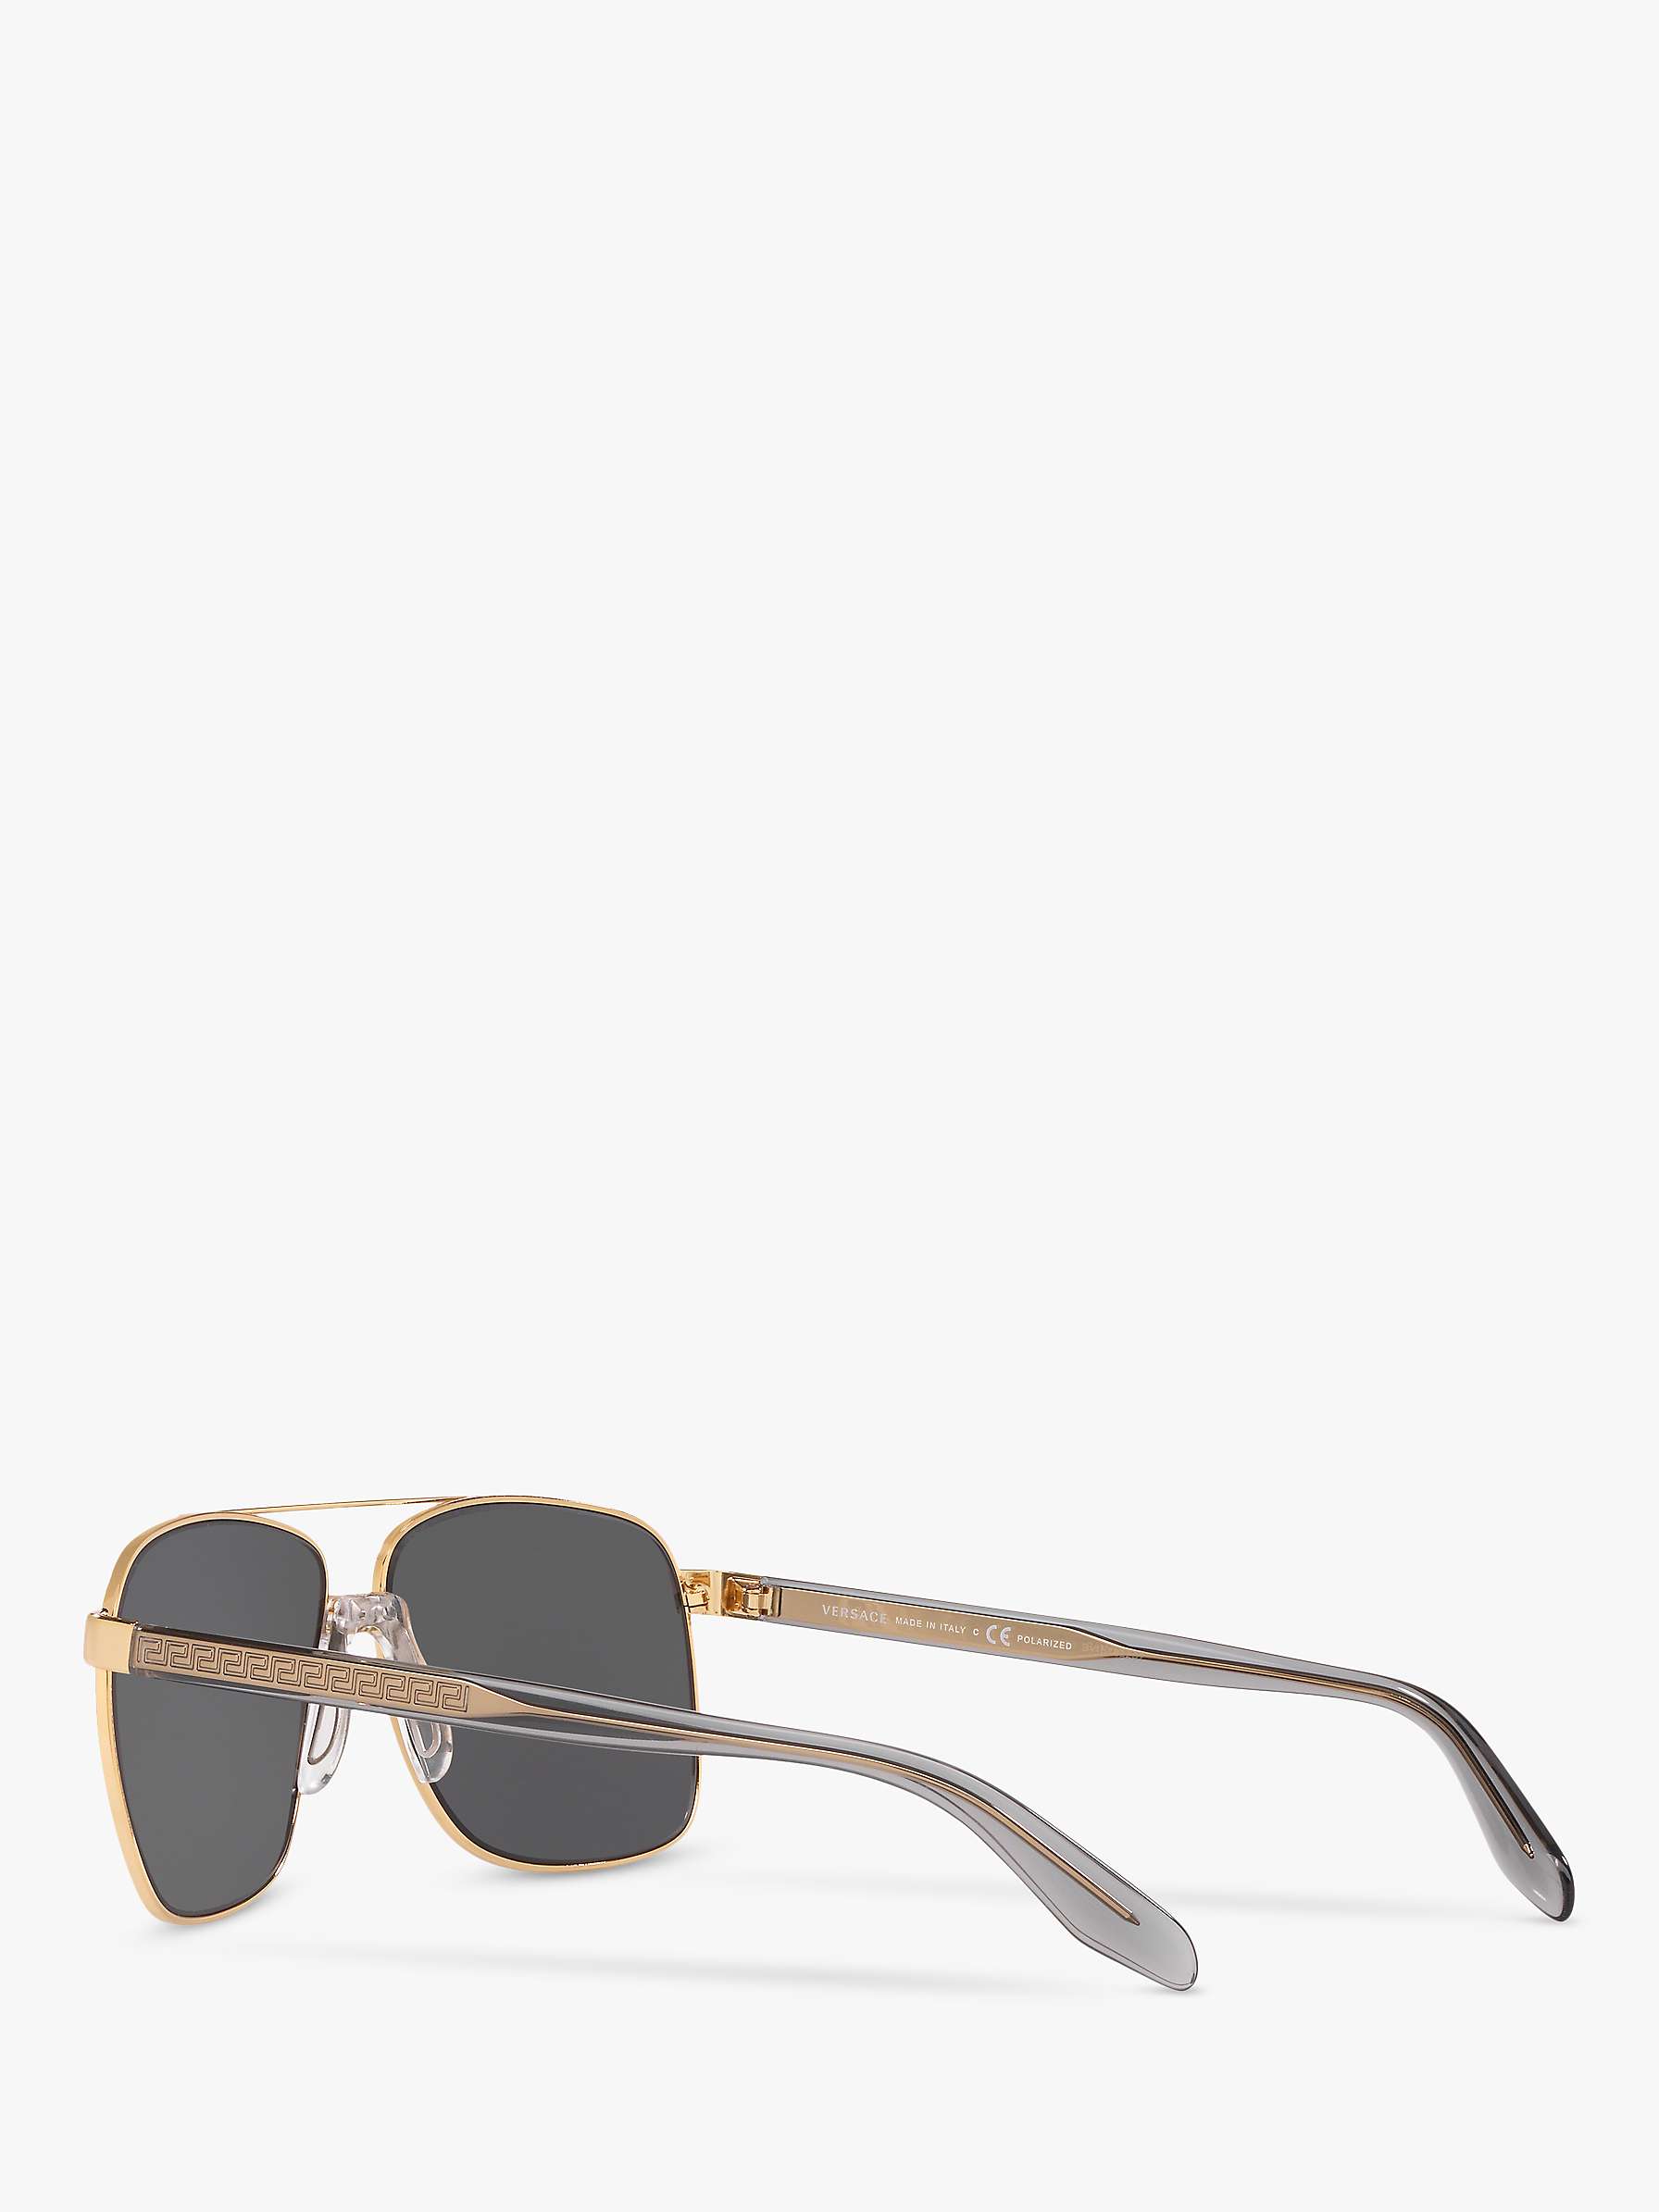 Versace VE2174 Men's Polarised Square Sunglasses, Gold/Mirror Grey at ...